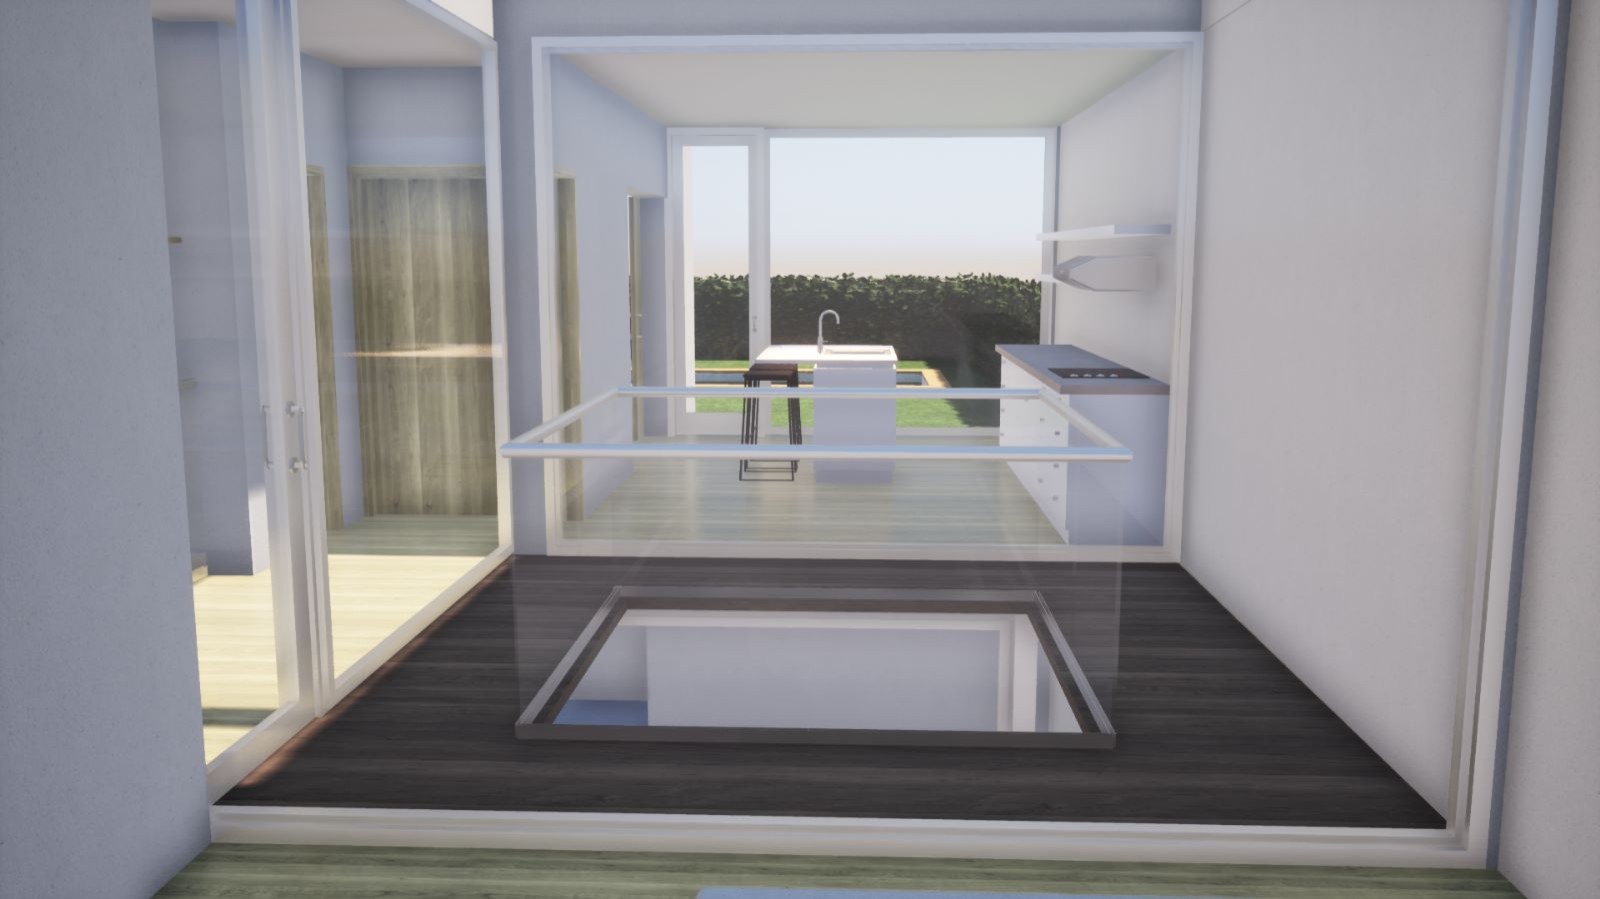 4 bedroom villa, new construction with seaview, for sale in Tavira, Algarve_228023